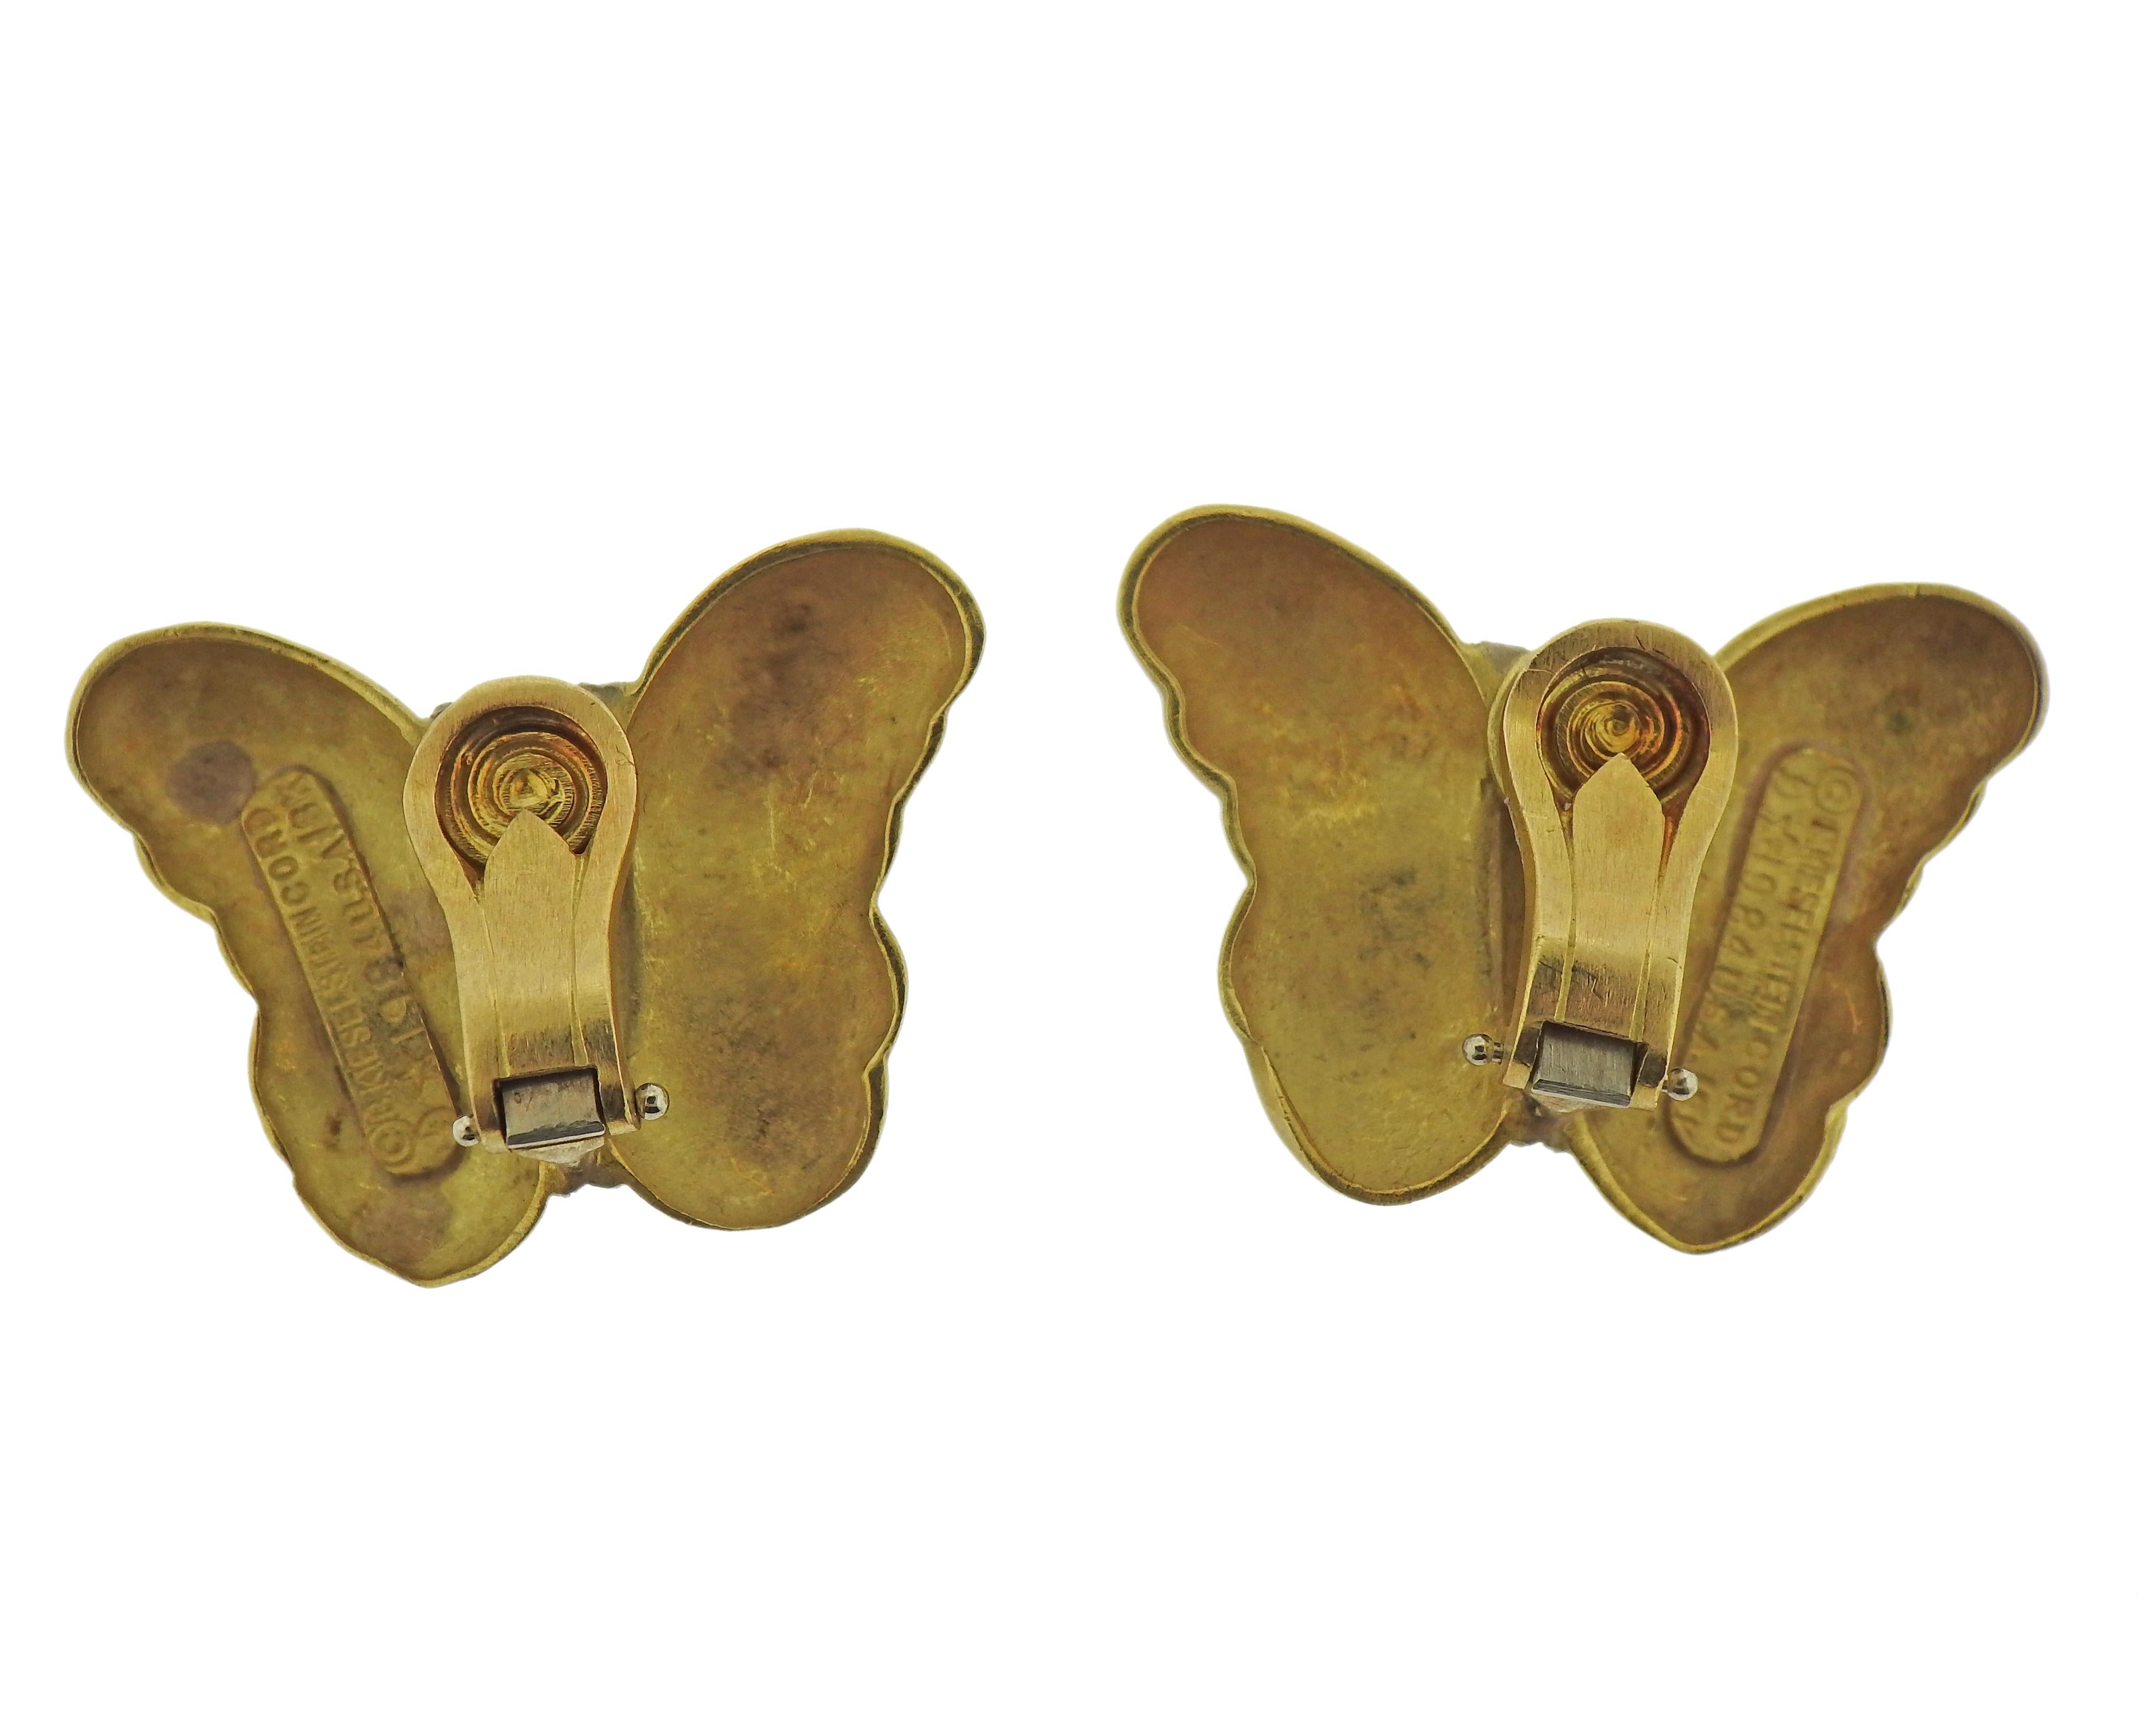 Pair of 18k gold butterfly earrings by Barry Kieselstein-Cord, with approx. 0.48ctw in diamonds. Earrings measure 30mm x 24mm. Marked: Kieselstein-Cord, USA, 1984, 18k. Weight - 24.7 grams.